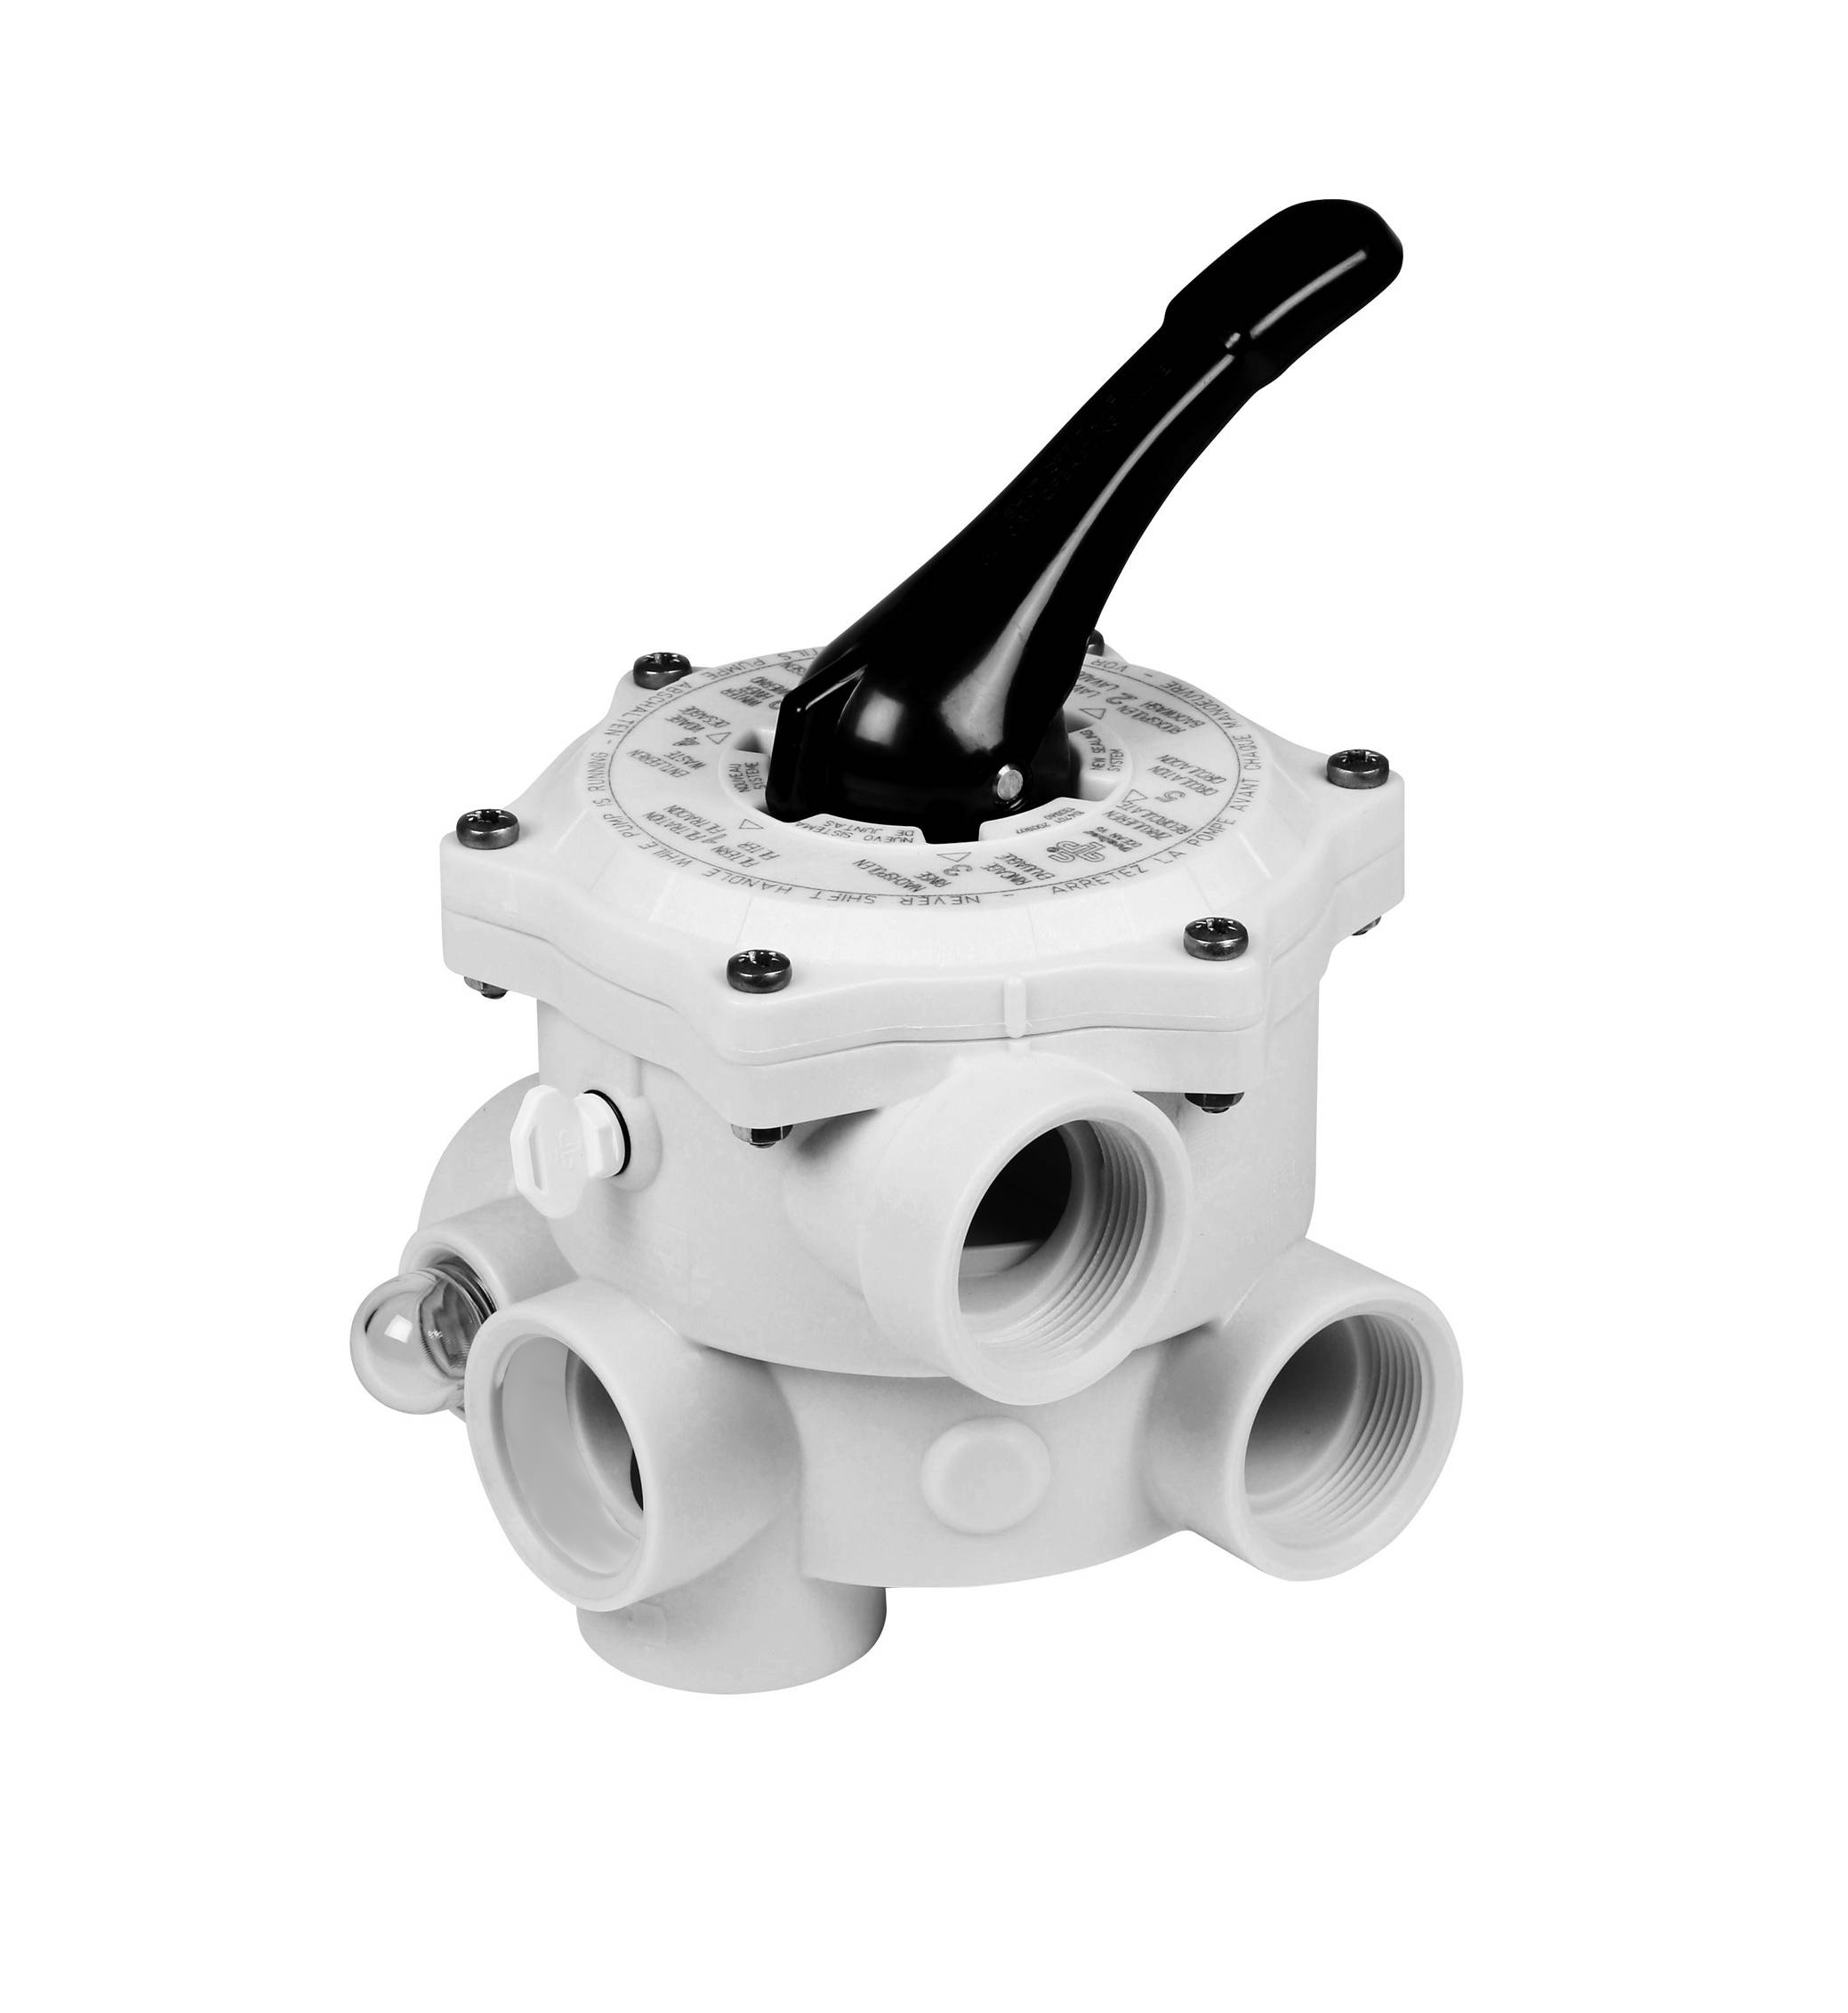 AXOS/COCOON SIDE 1"1/2 6-way valve kit